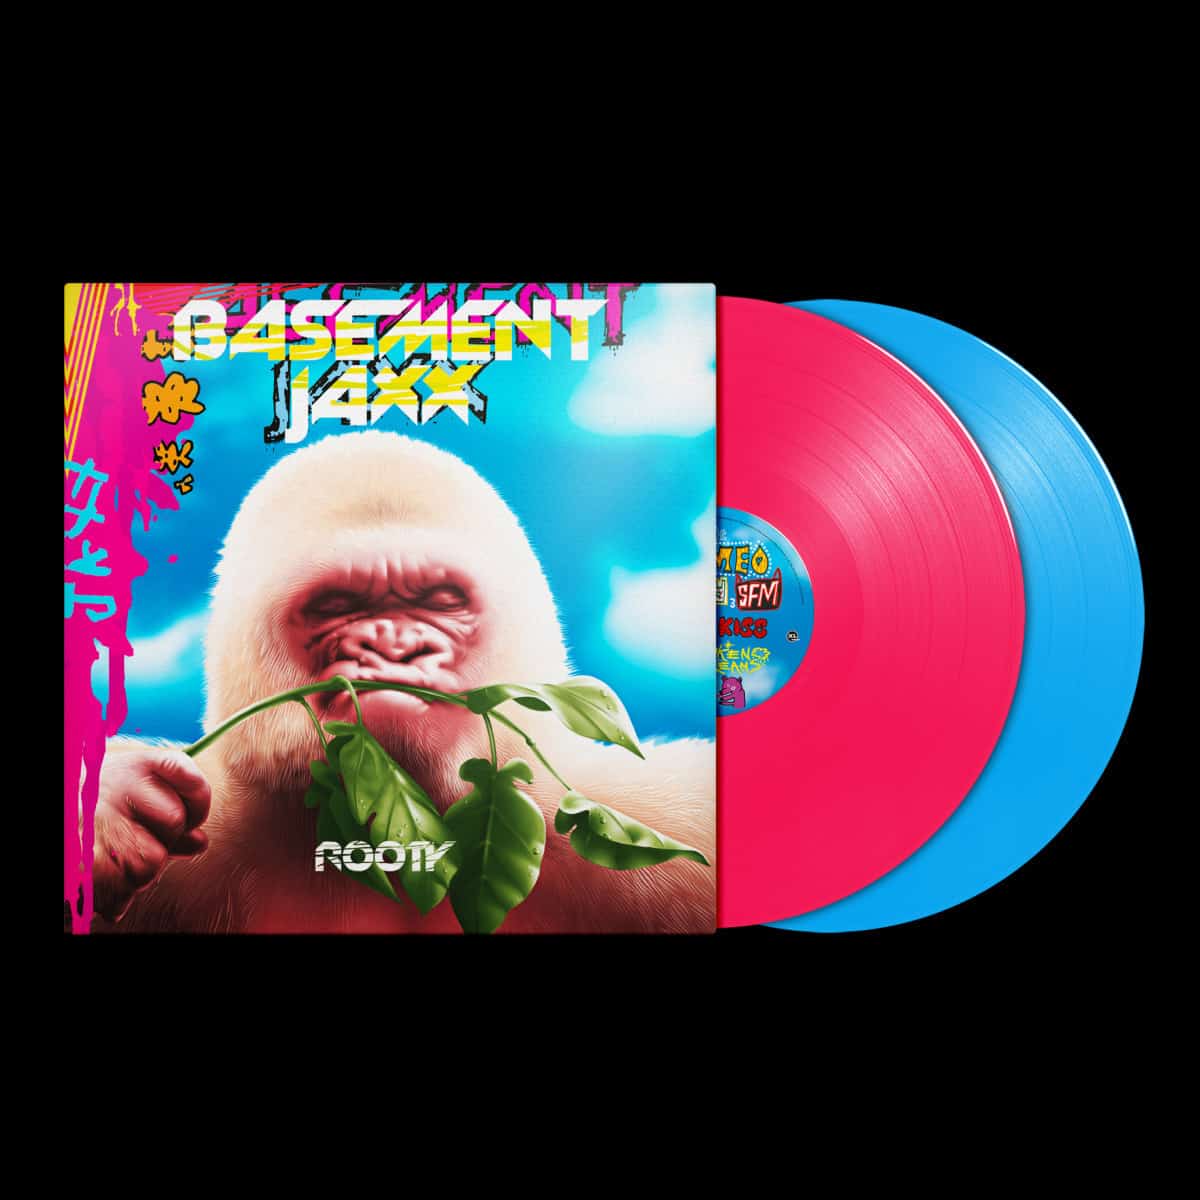 Basement Jaxx - Rooty (Pink And Blue Vinyl)